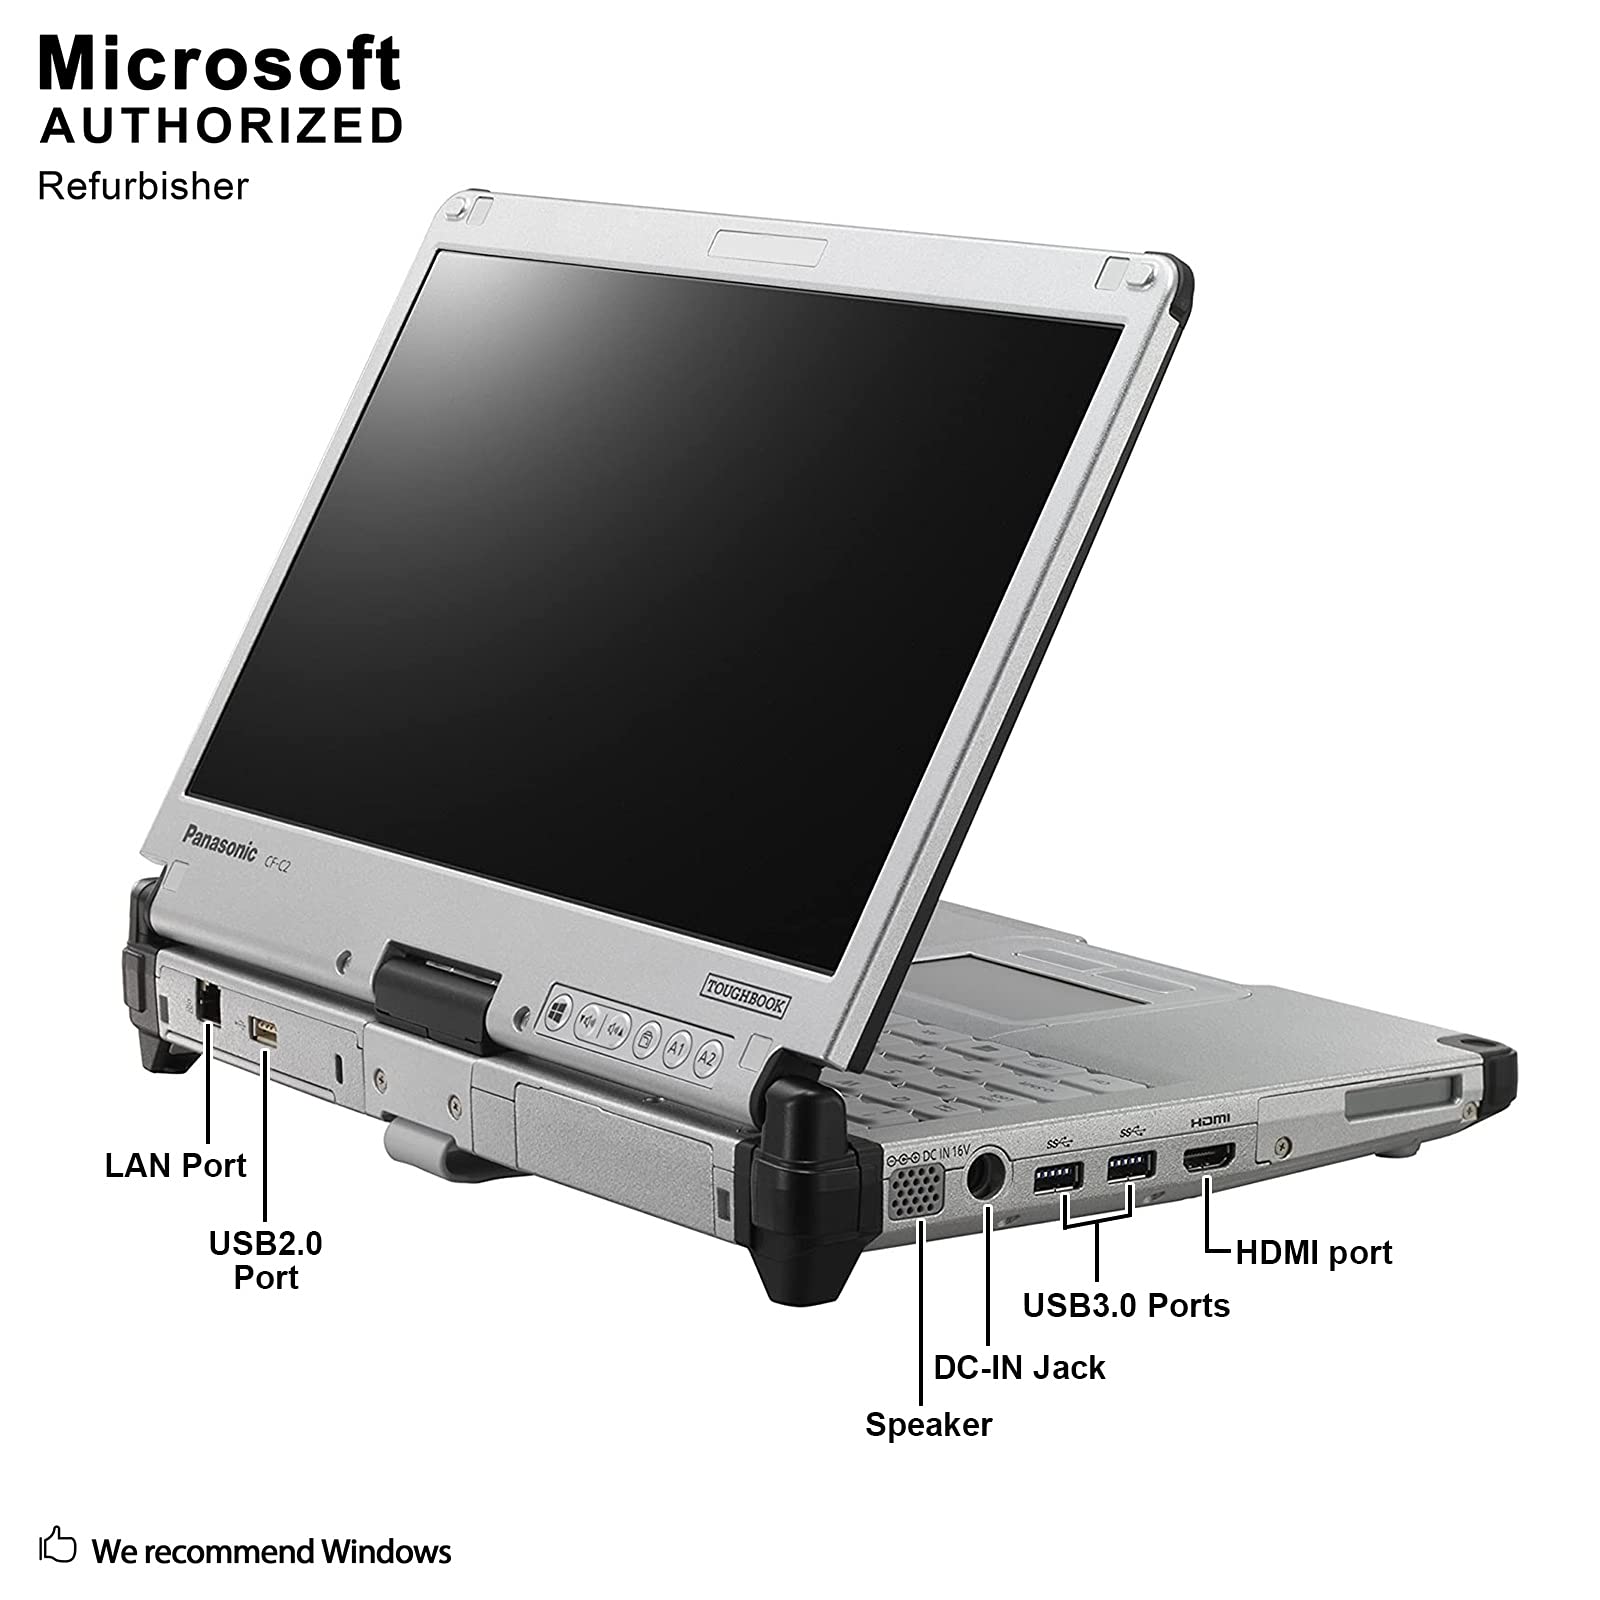 Panasonic Laptop Convertible Tablet CF-C2, Intel i5 4th Gen, 1.90GHz, 12.5 HD Touchscreen, 8GB, 240GB SSD, Webcam, WiFi, Bluetooth, Windows 10 Pro Upgraded (Renewed)